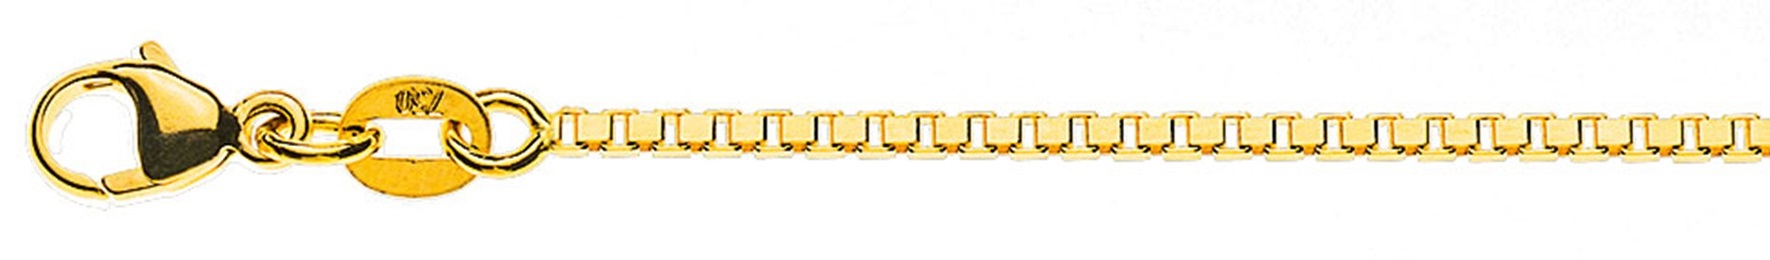 AURONOS Prestige Necklace yellow gold 18K Venetian chain diamond 42cm 1.4mm